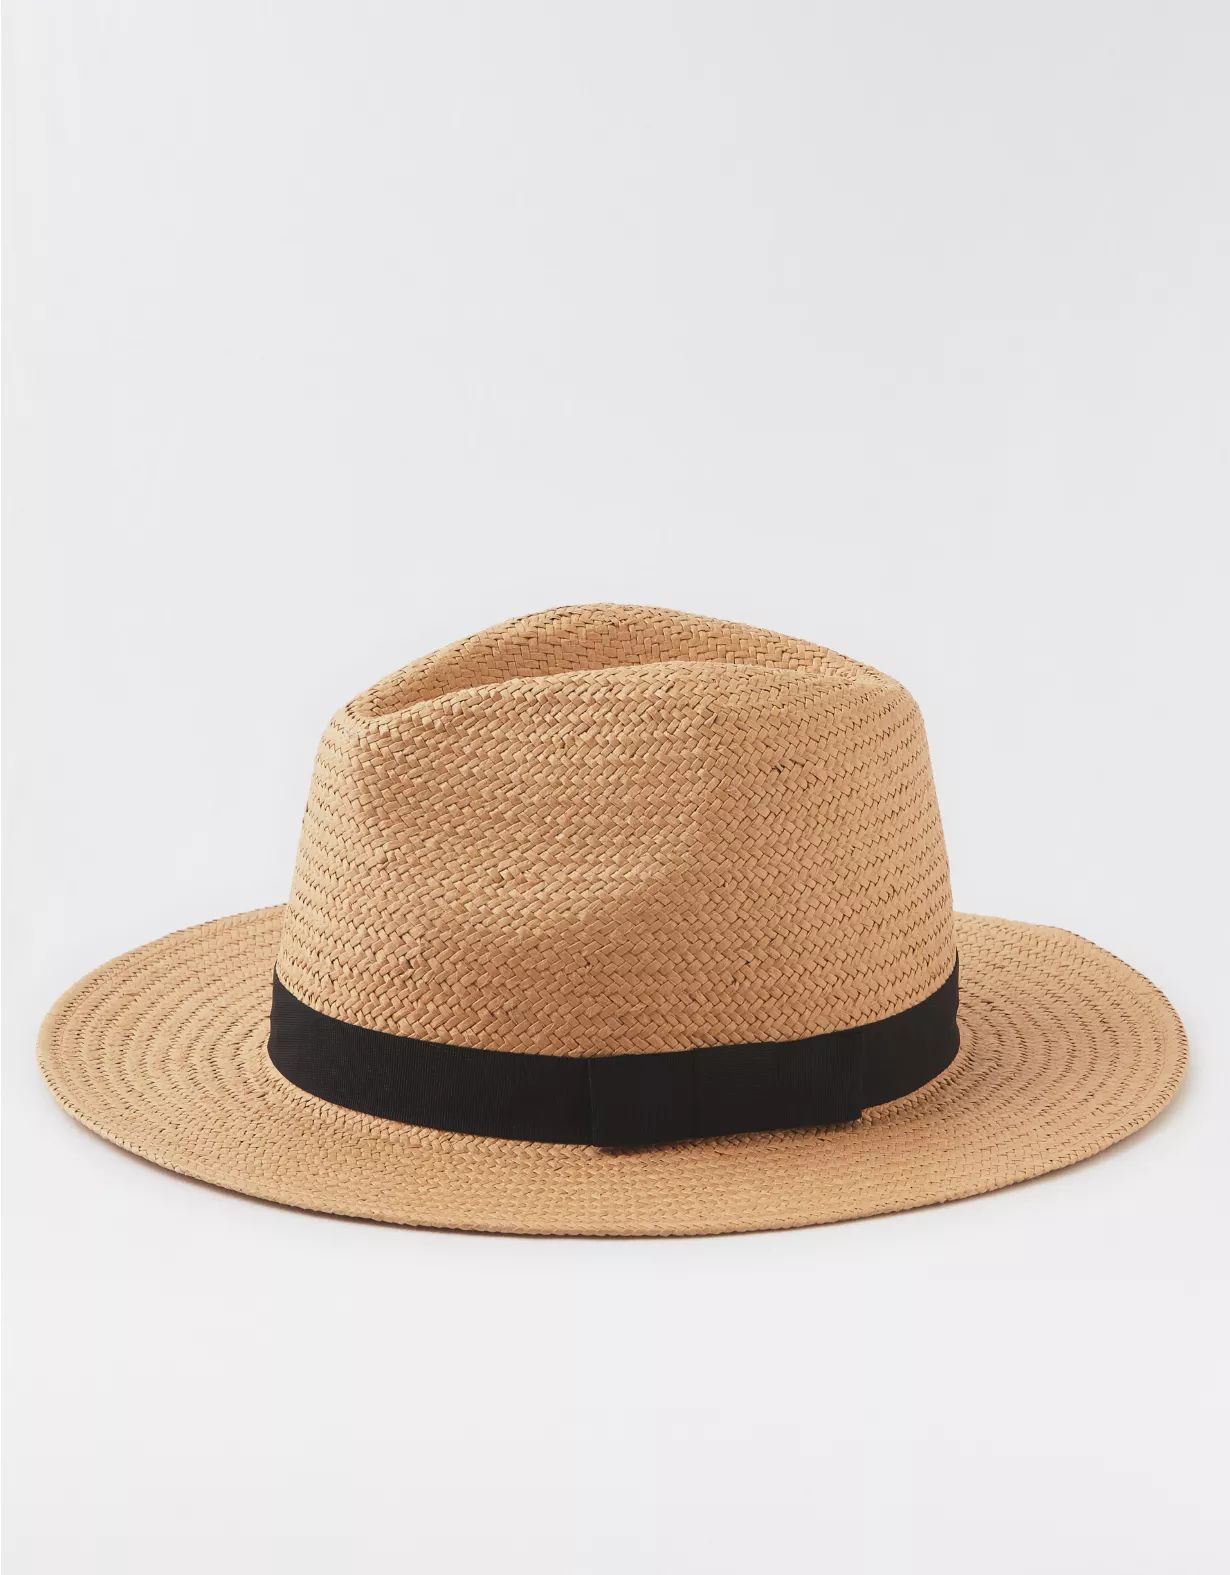 Aerie Straw Panama Hat | Aerie